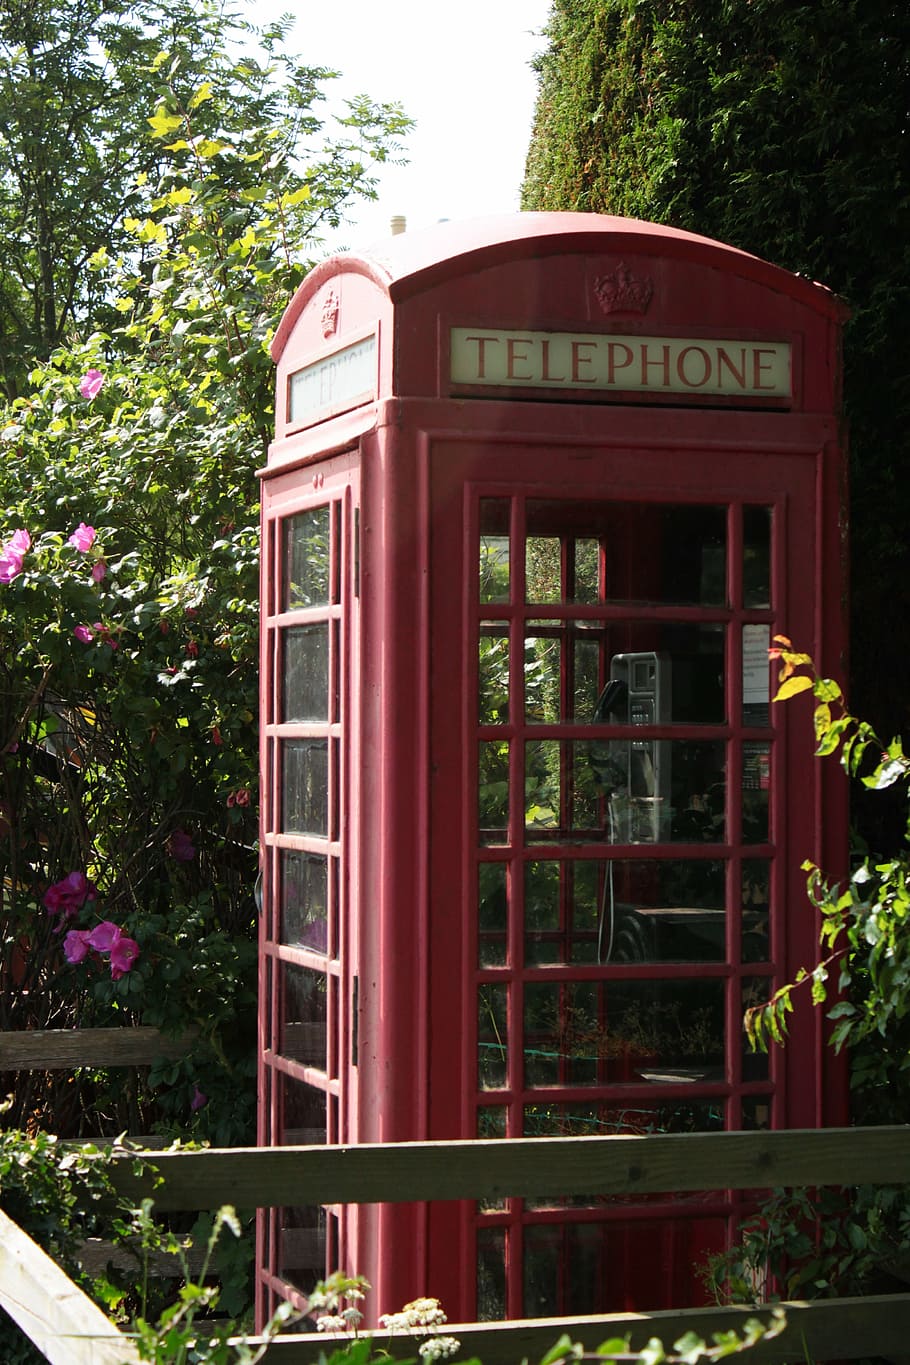 phone, scotland, nature, uk, summer, shrubs, overgrown, telephone booth, communication, text